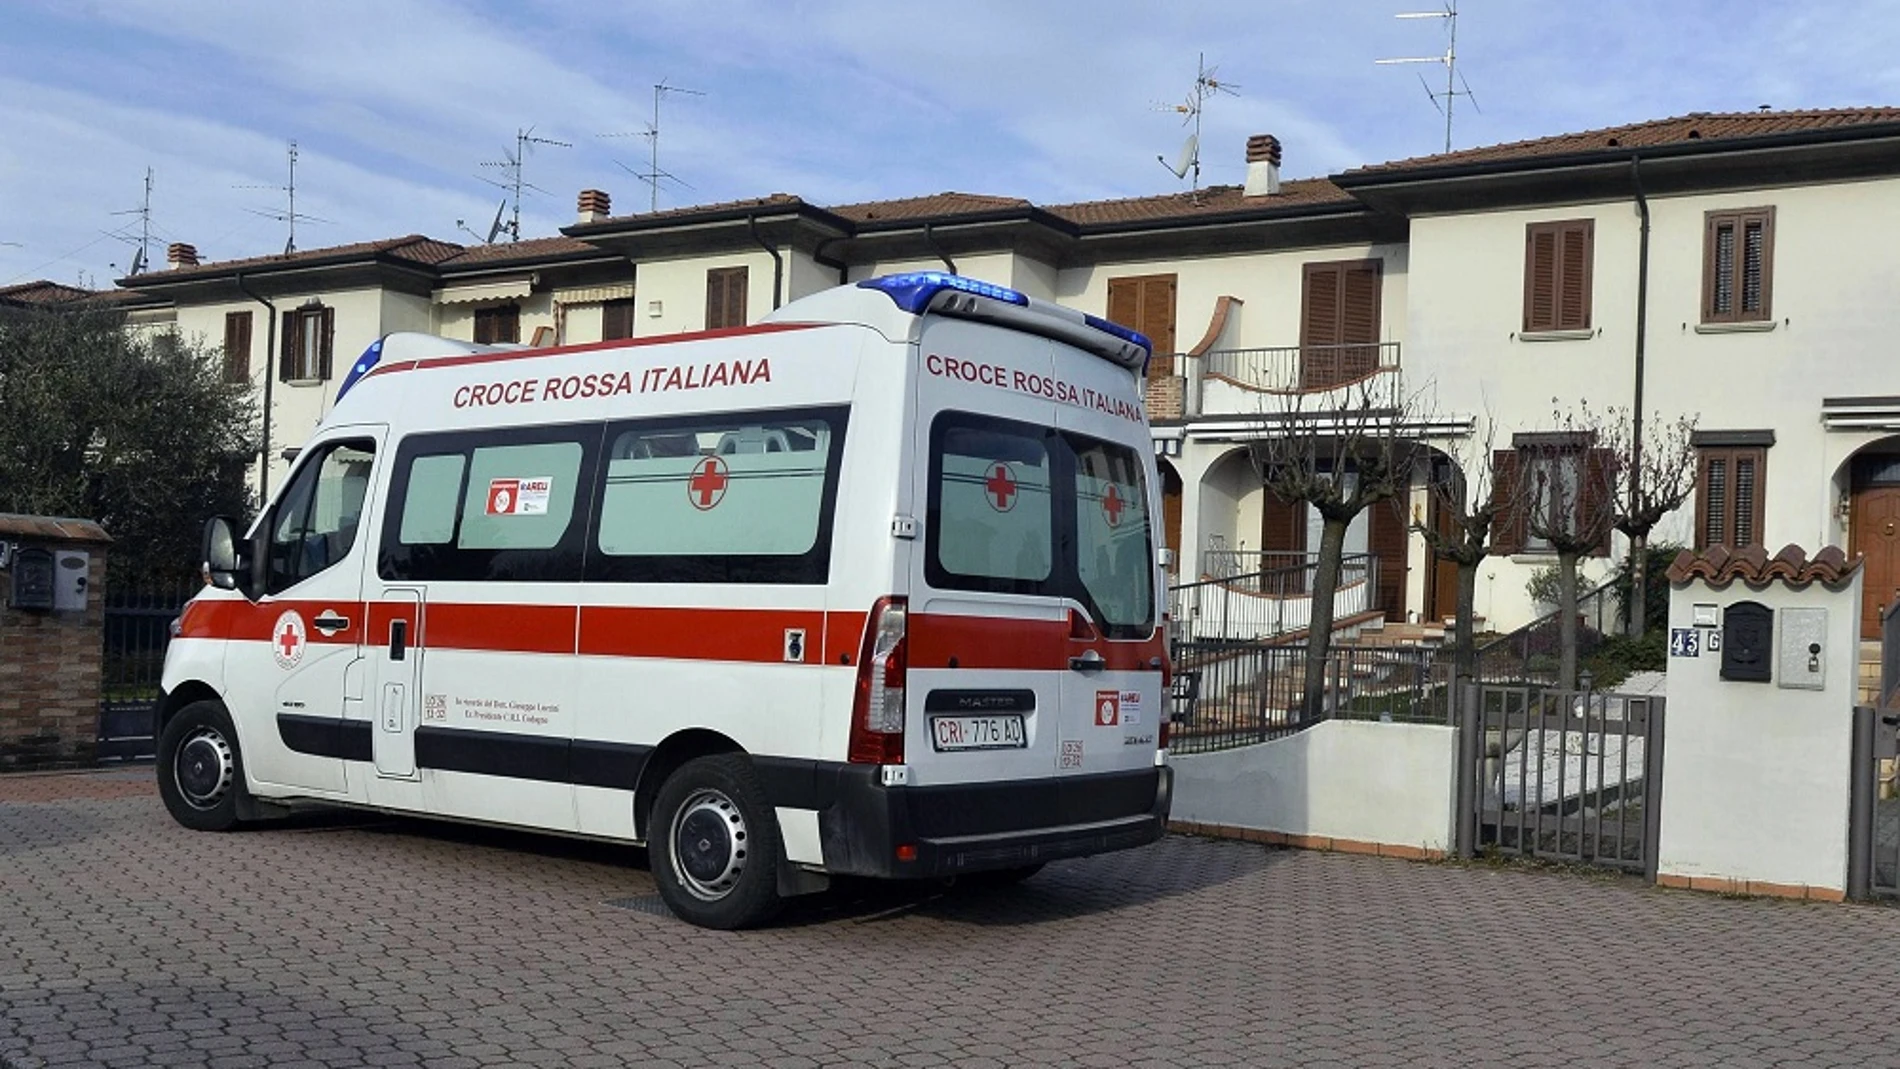 Imagen de una ambulancia en Italia